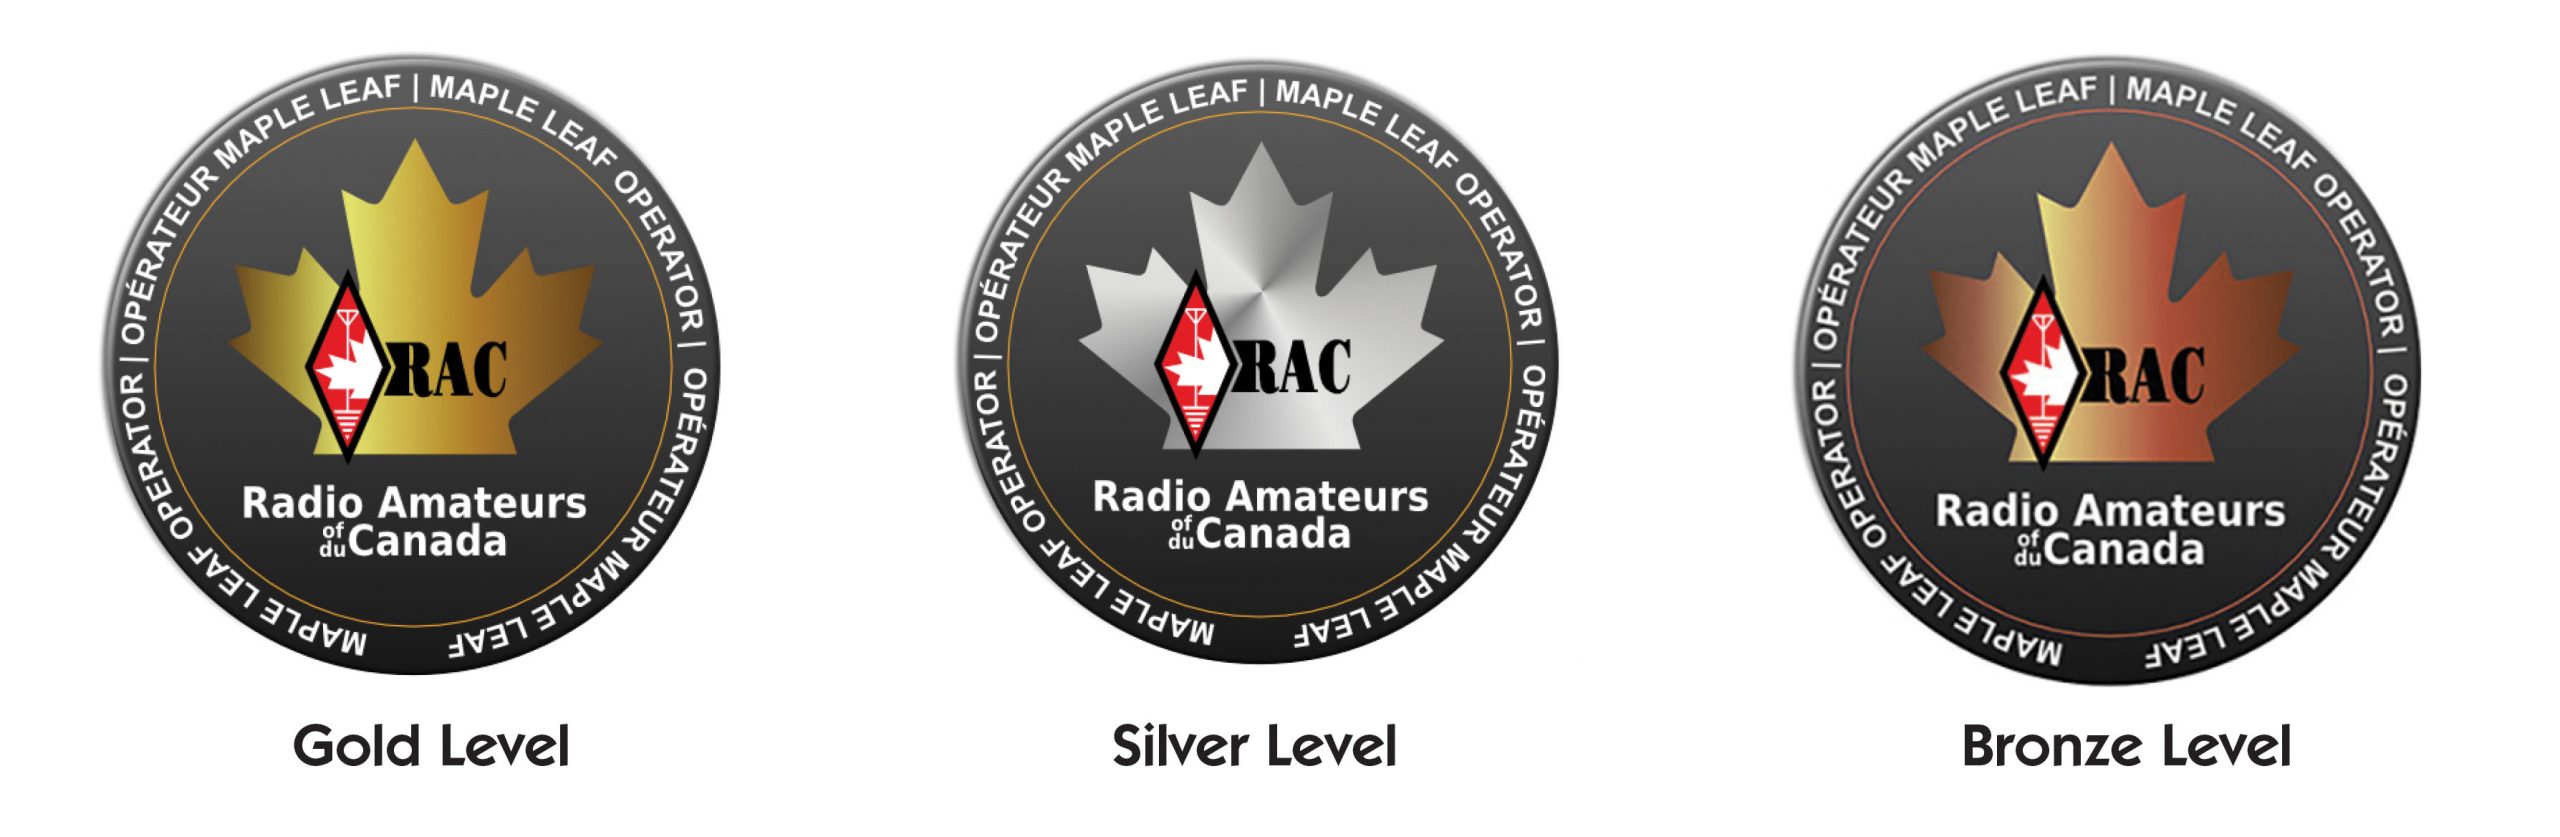 RAC Maple Leaf Operator Member logos